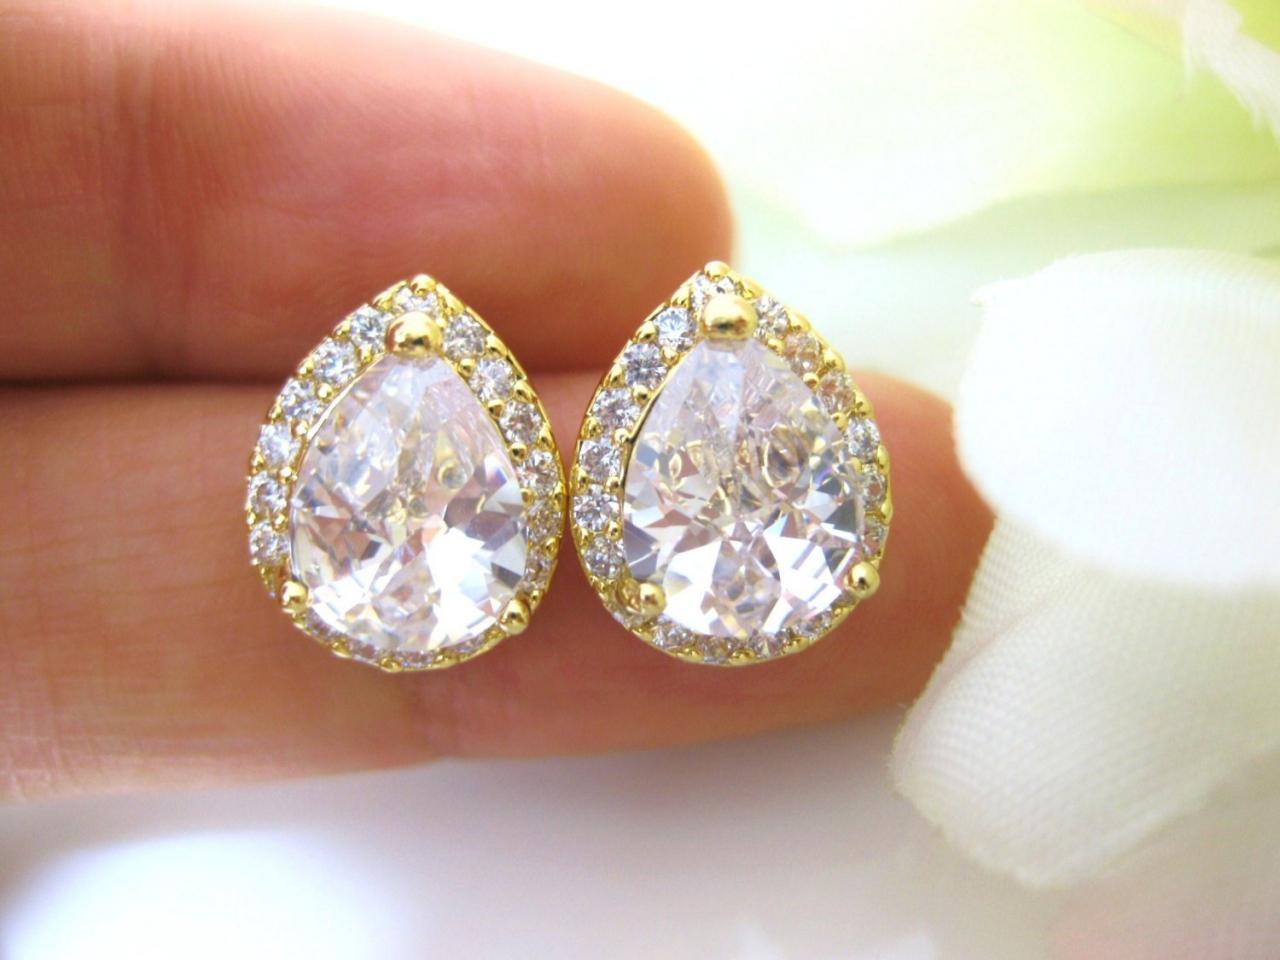 Gold Crystal Earrings Cubic Zirconia Teardrop Stud Earrings Wedding Jewelry Bridesmaid Gift Bridal Stud Earrings Gold Earrings (e010)